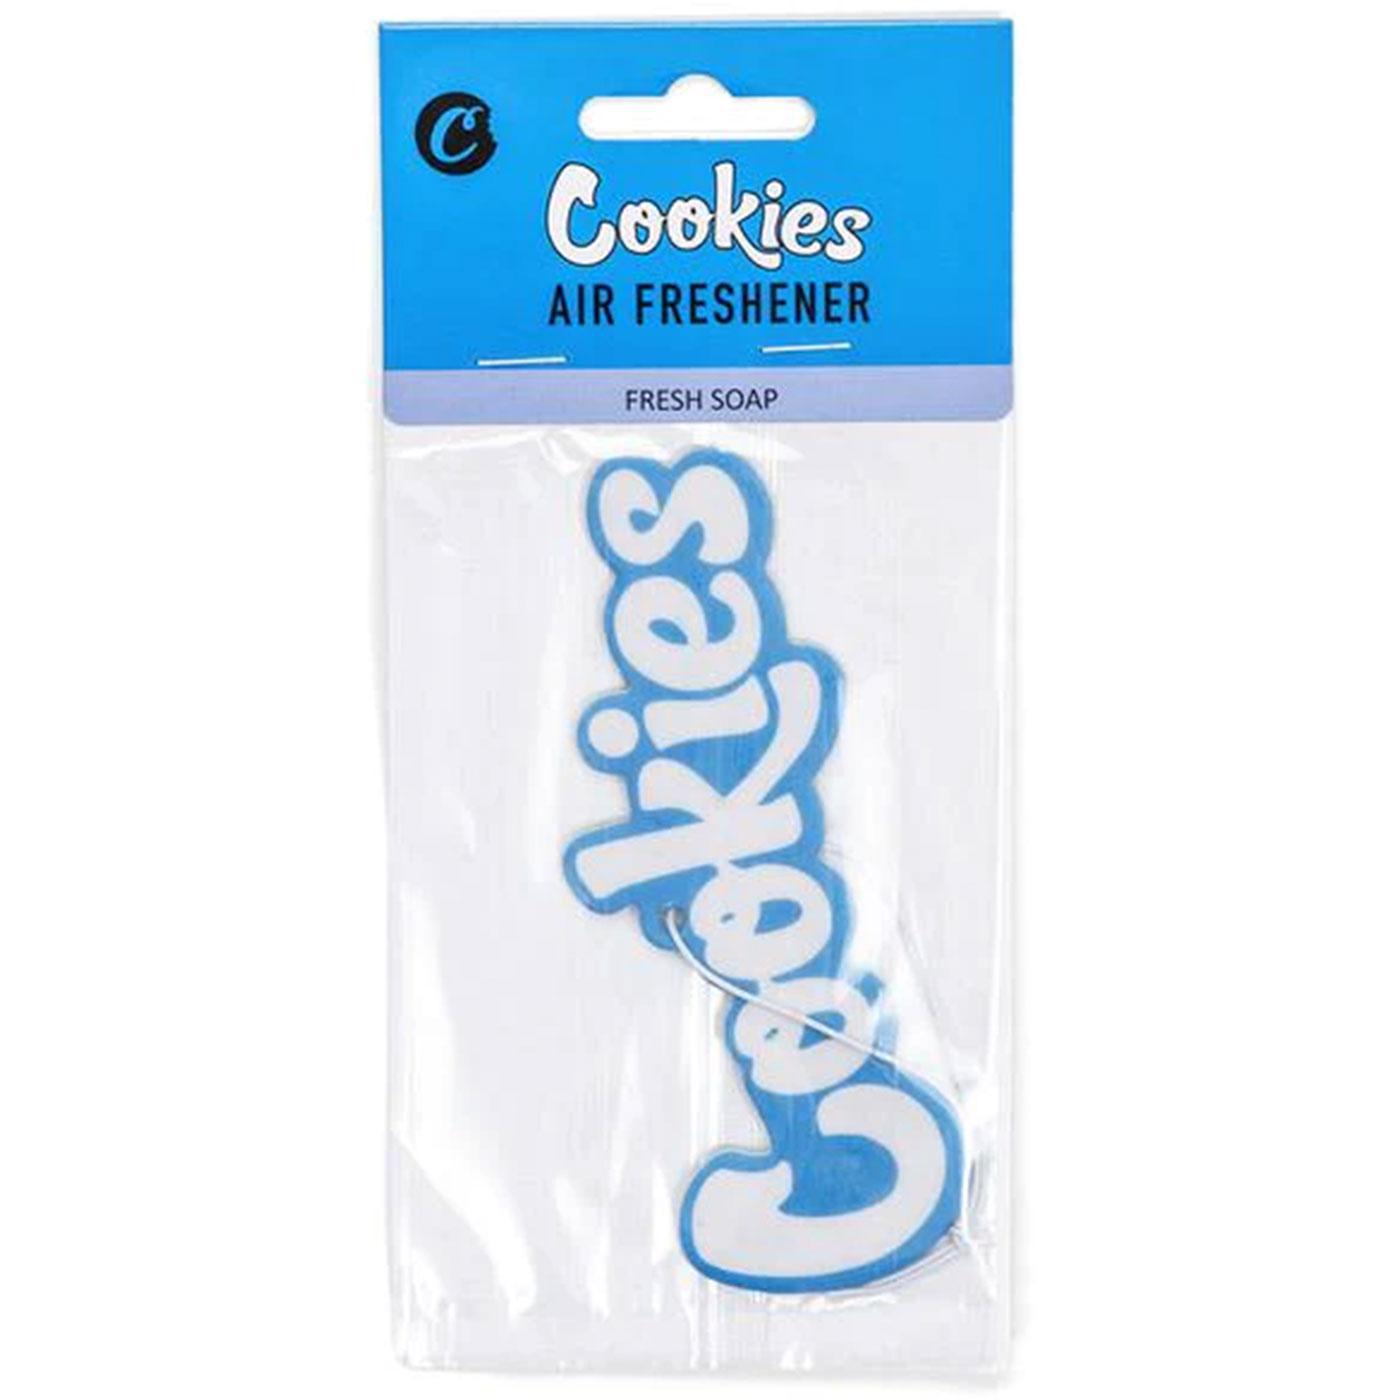 Cookies Original Car Air Freshener (Various Scents) Fresh Soap | Cookies Clothing